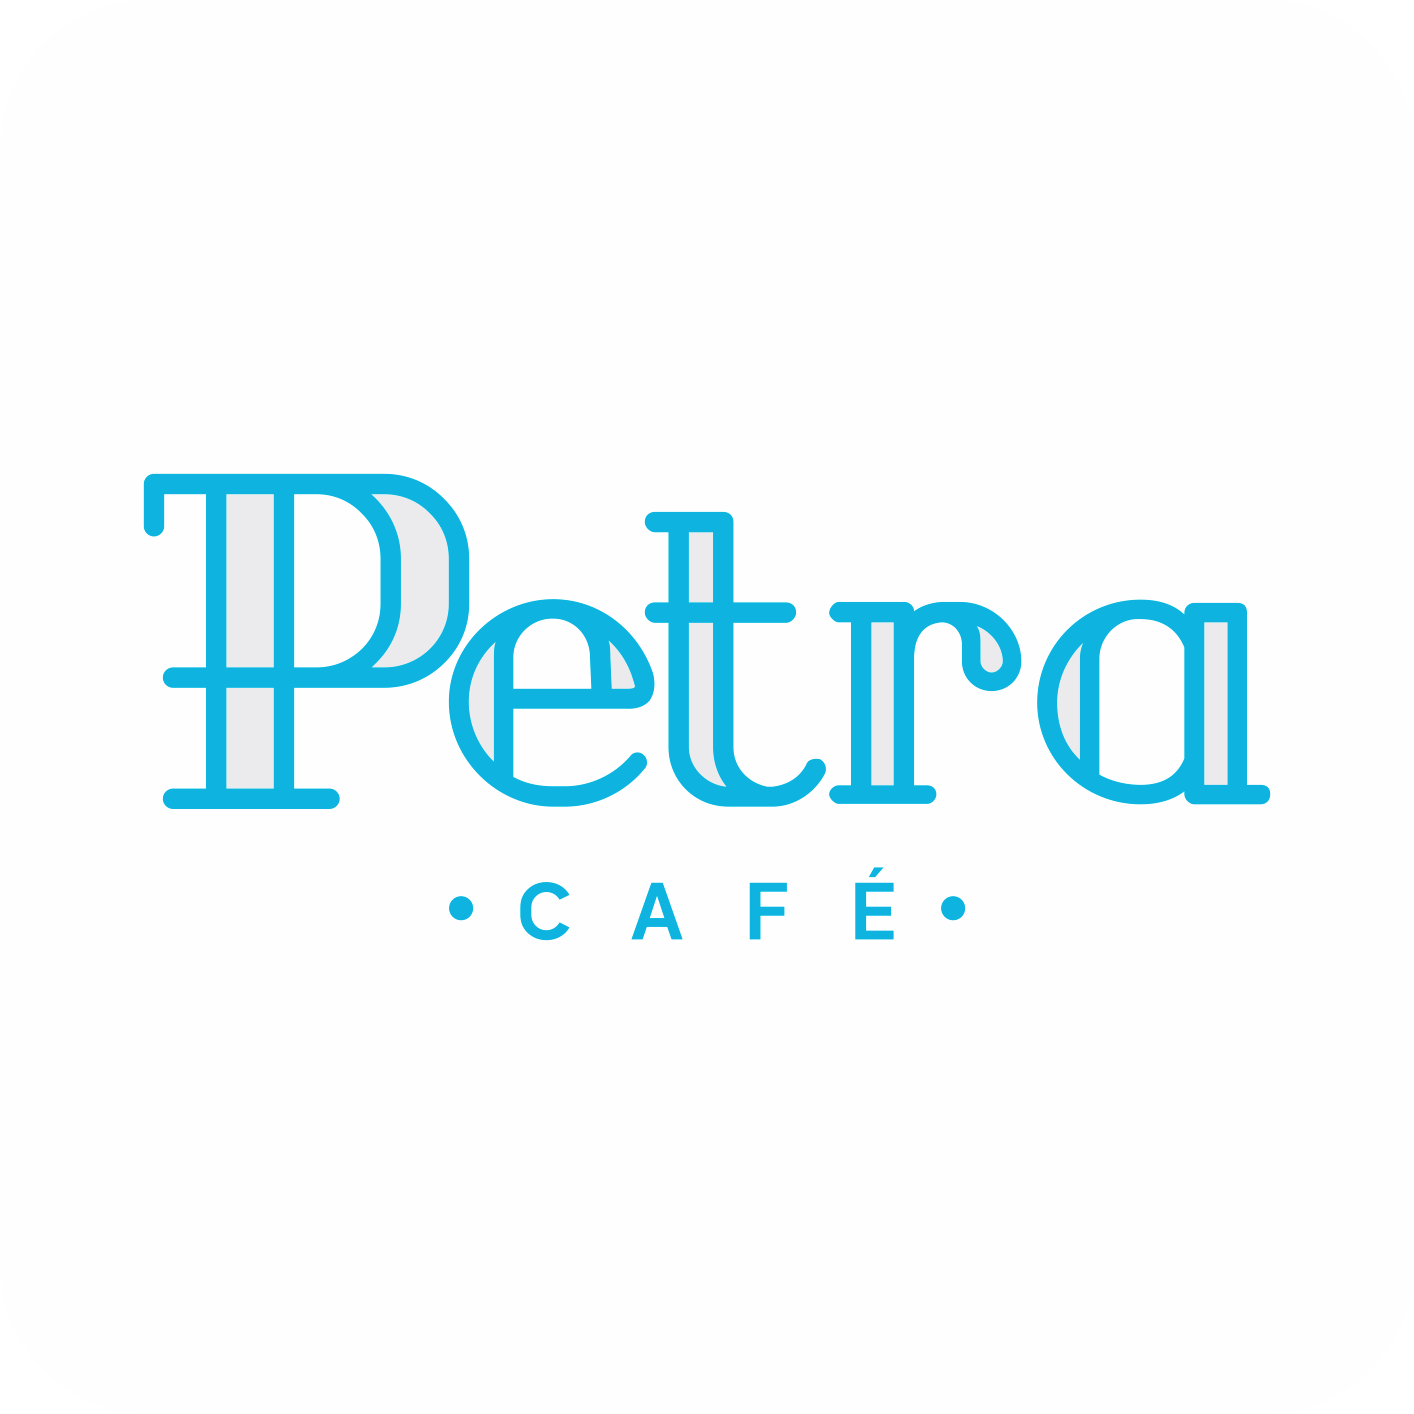 Petra Café Yaracuy